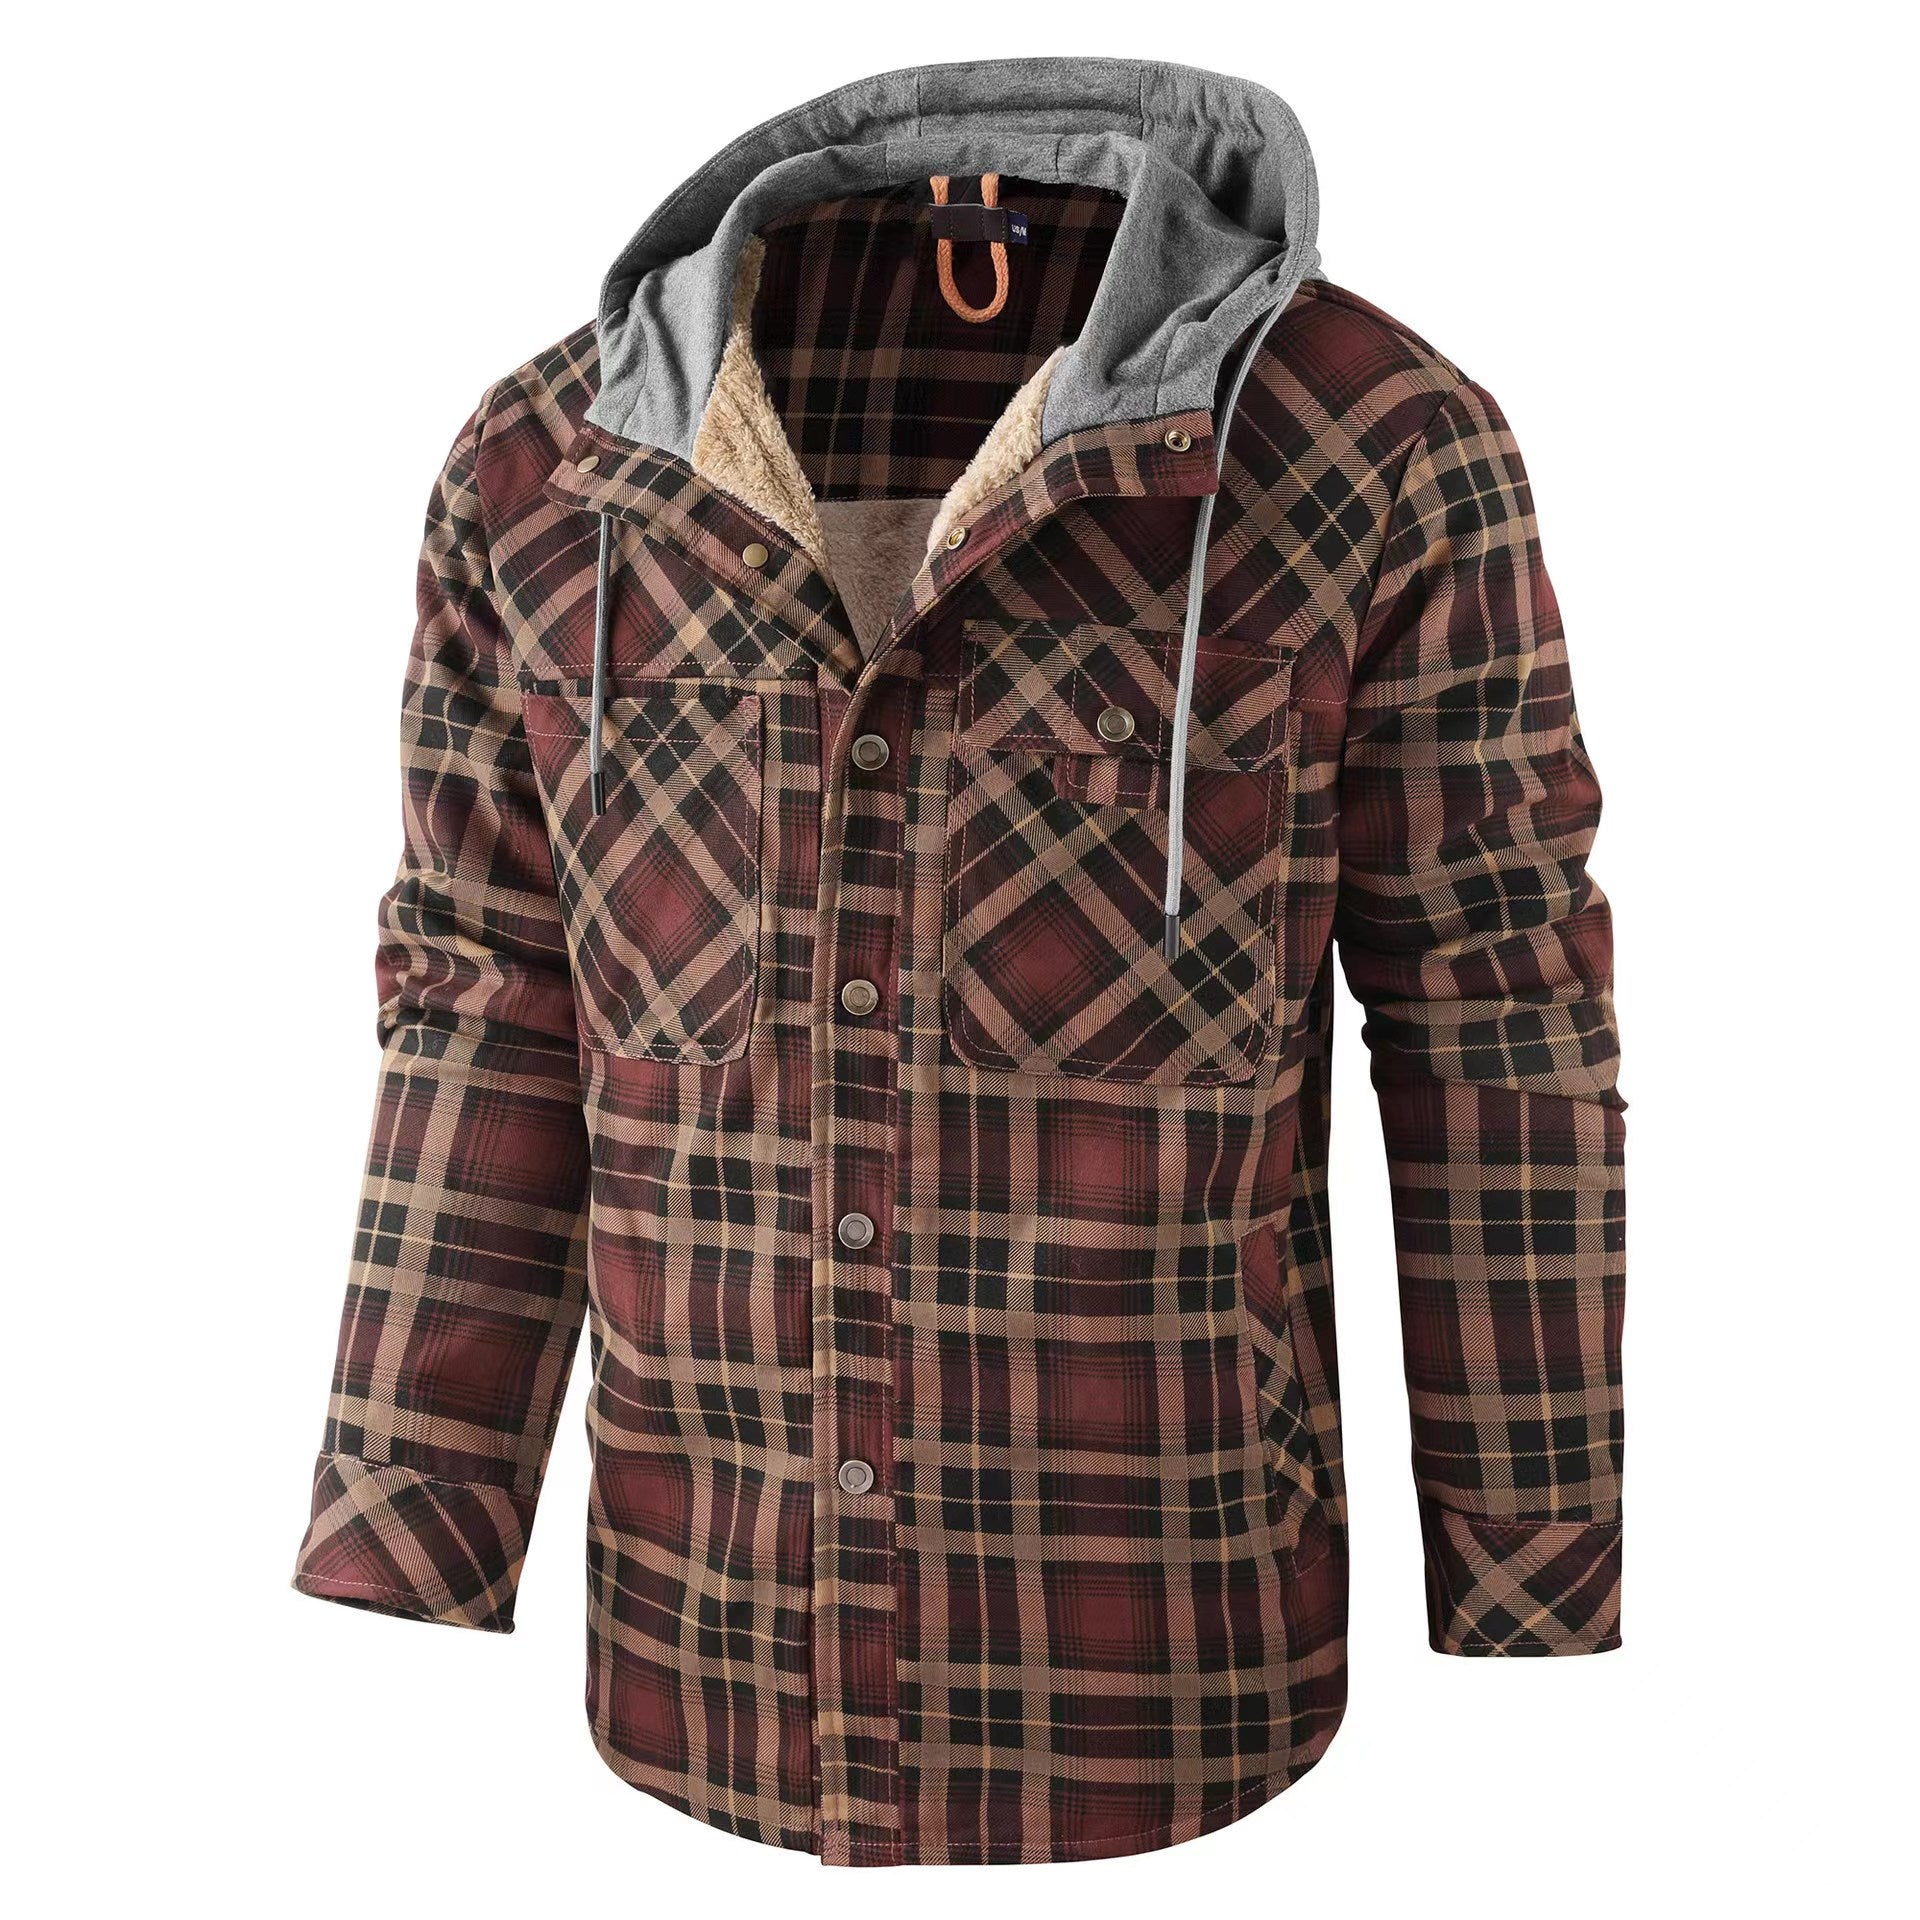 Men's Outdoor Vintage Plaid Fleece Warm Lapel Jacket